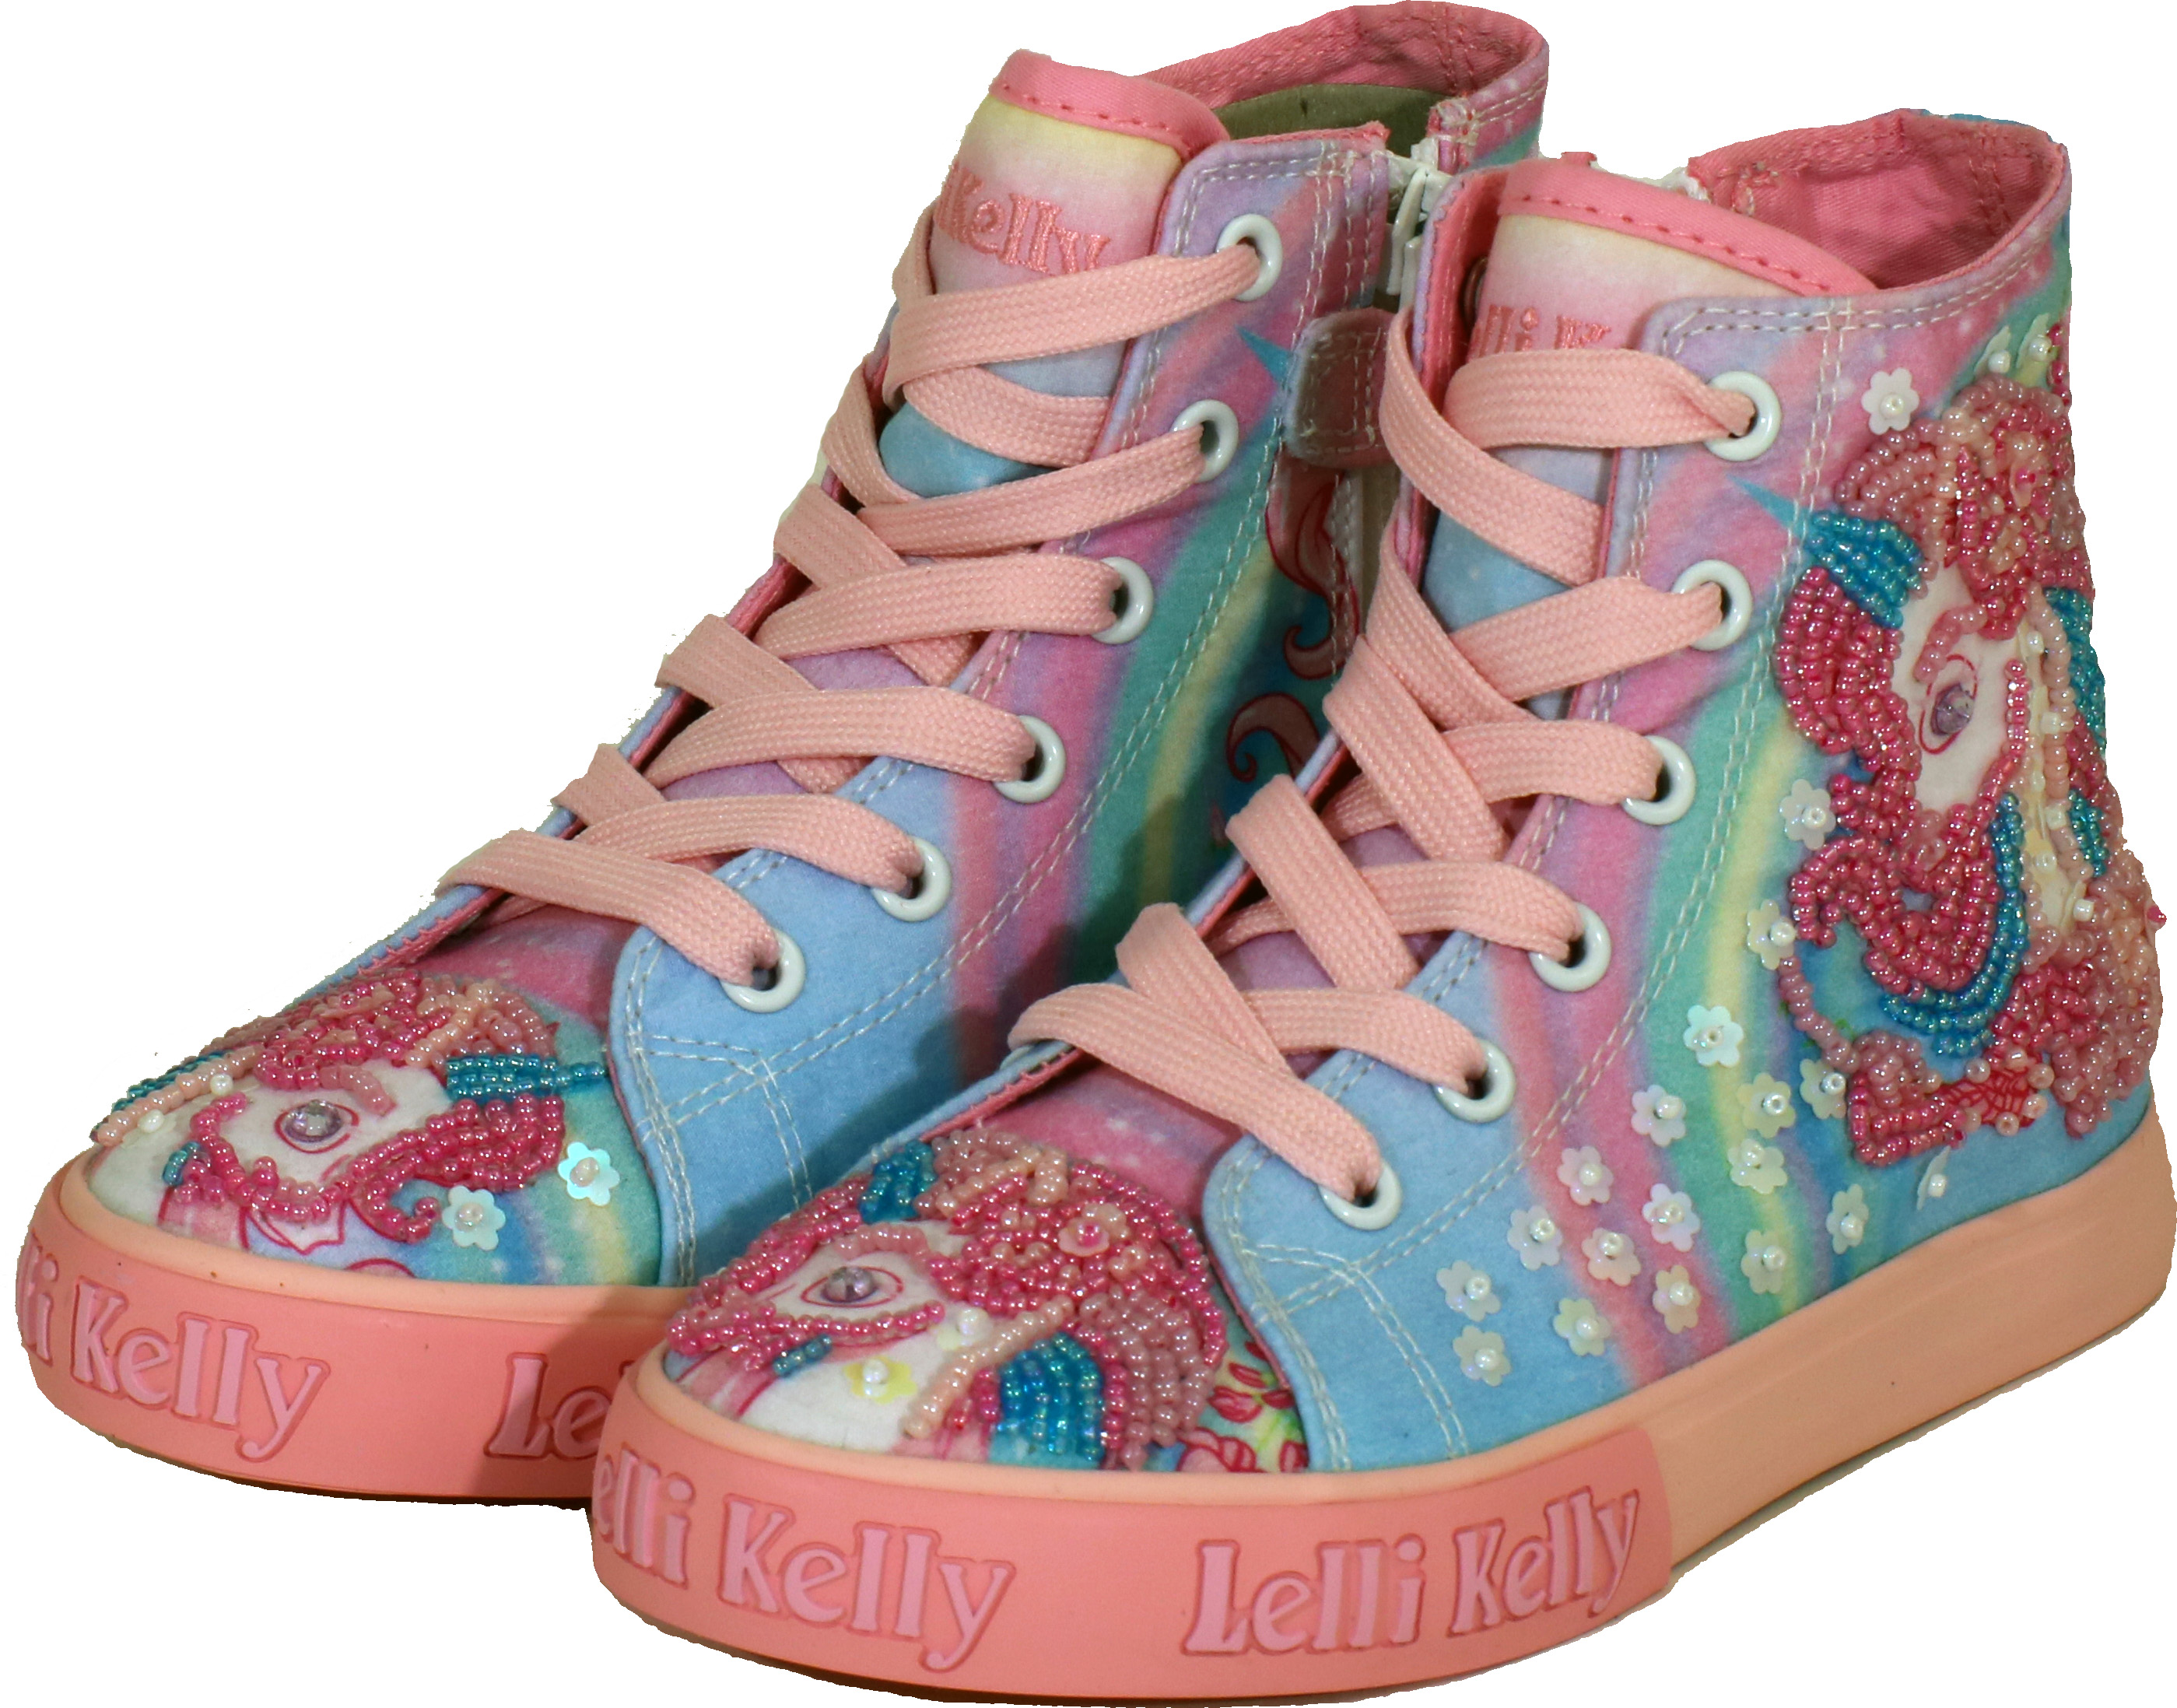 Lelli Kelly Sneaker High - Einhorn - Multi Rosa Synthetik